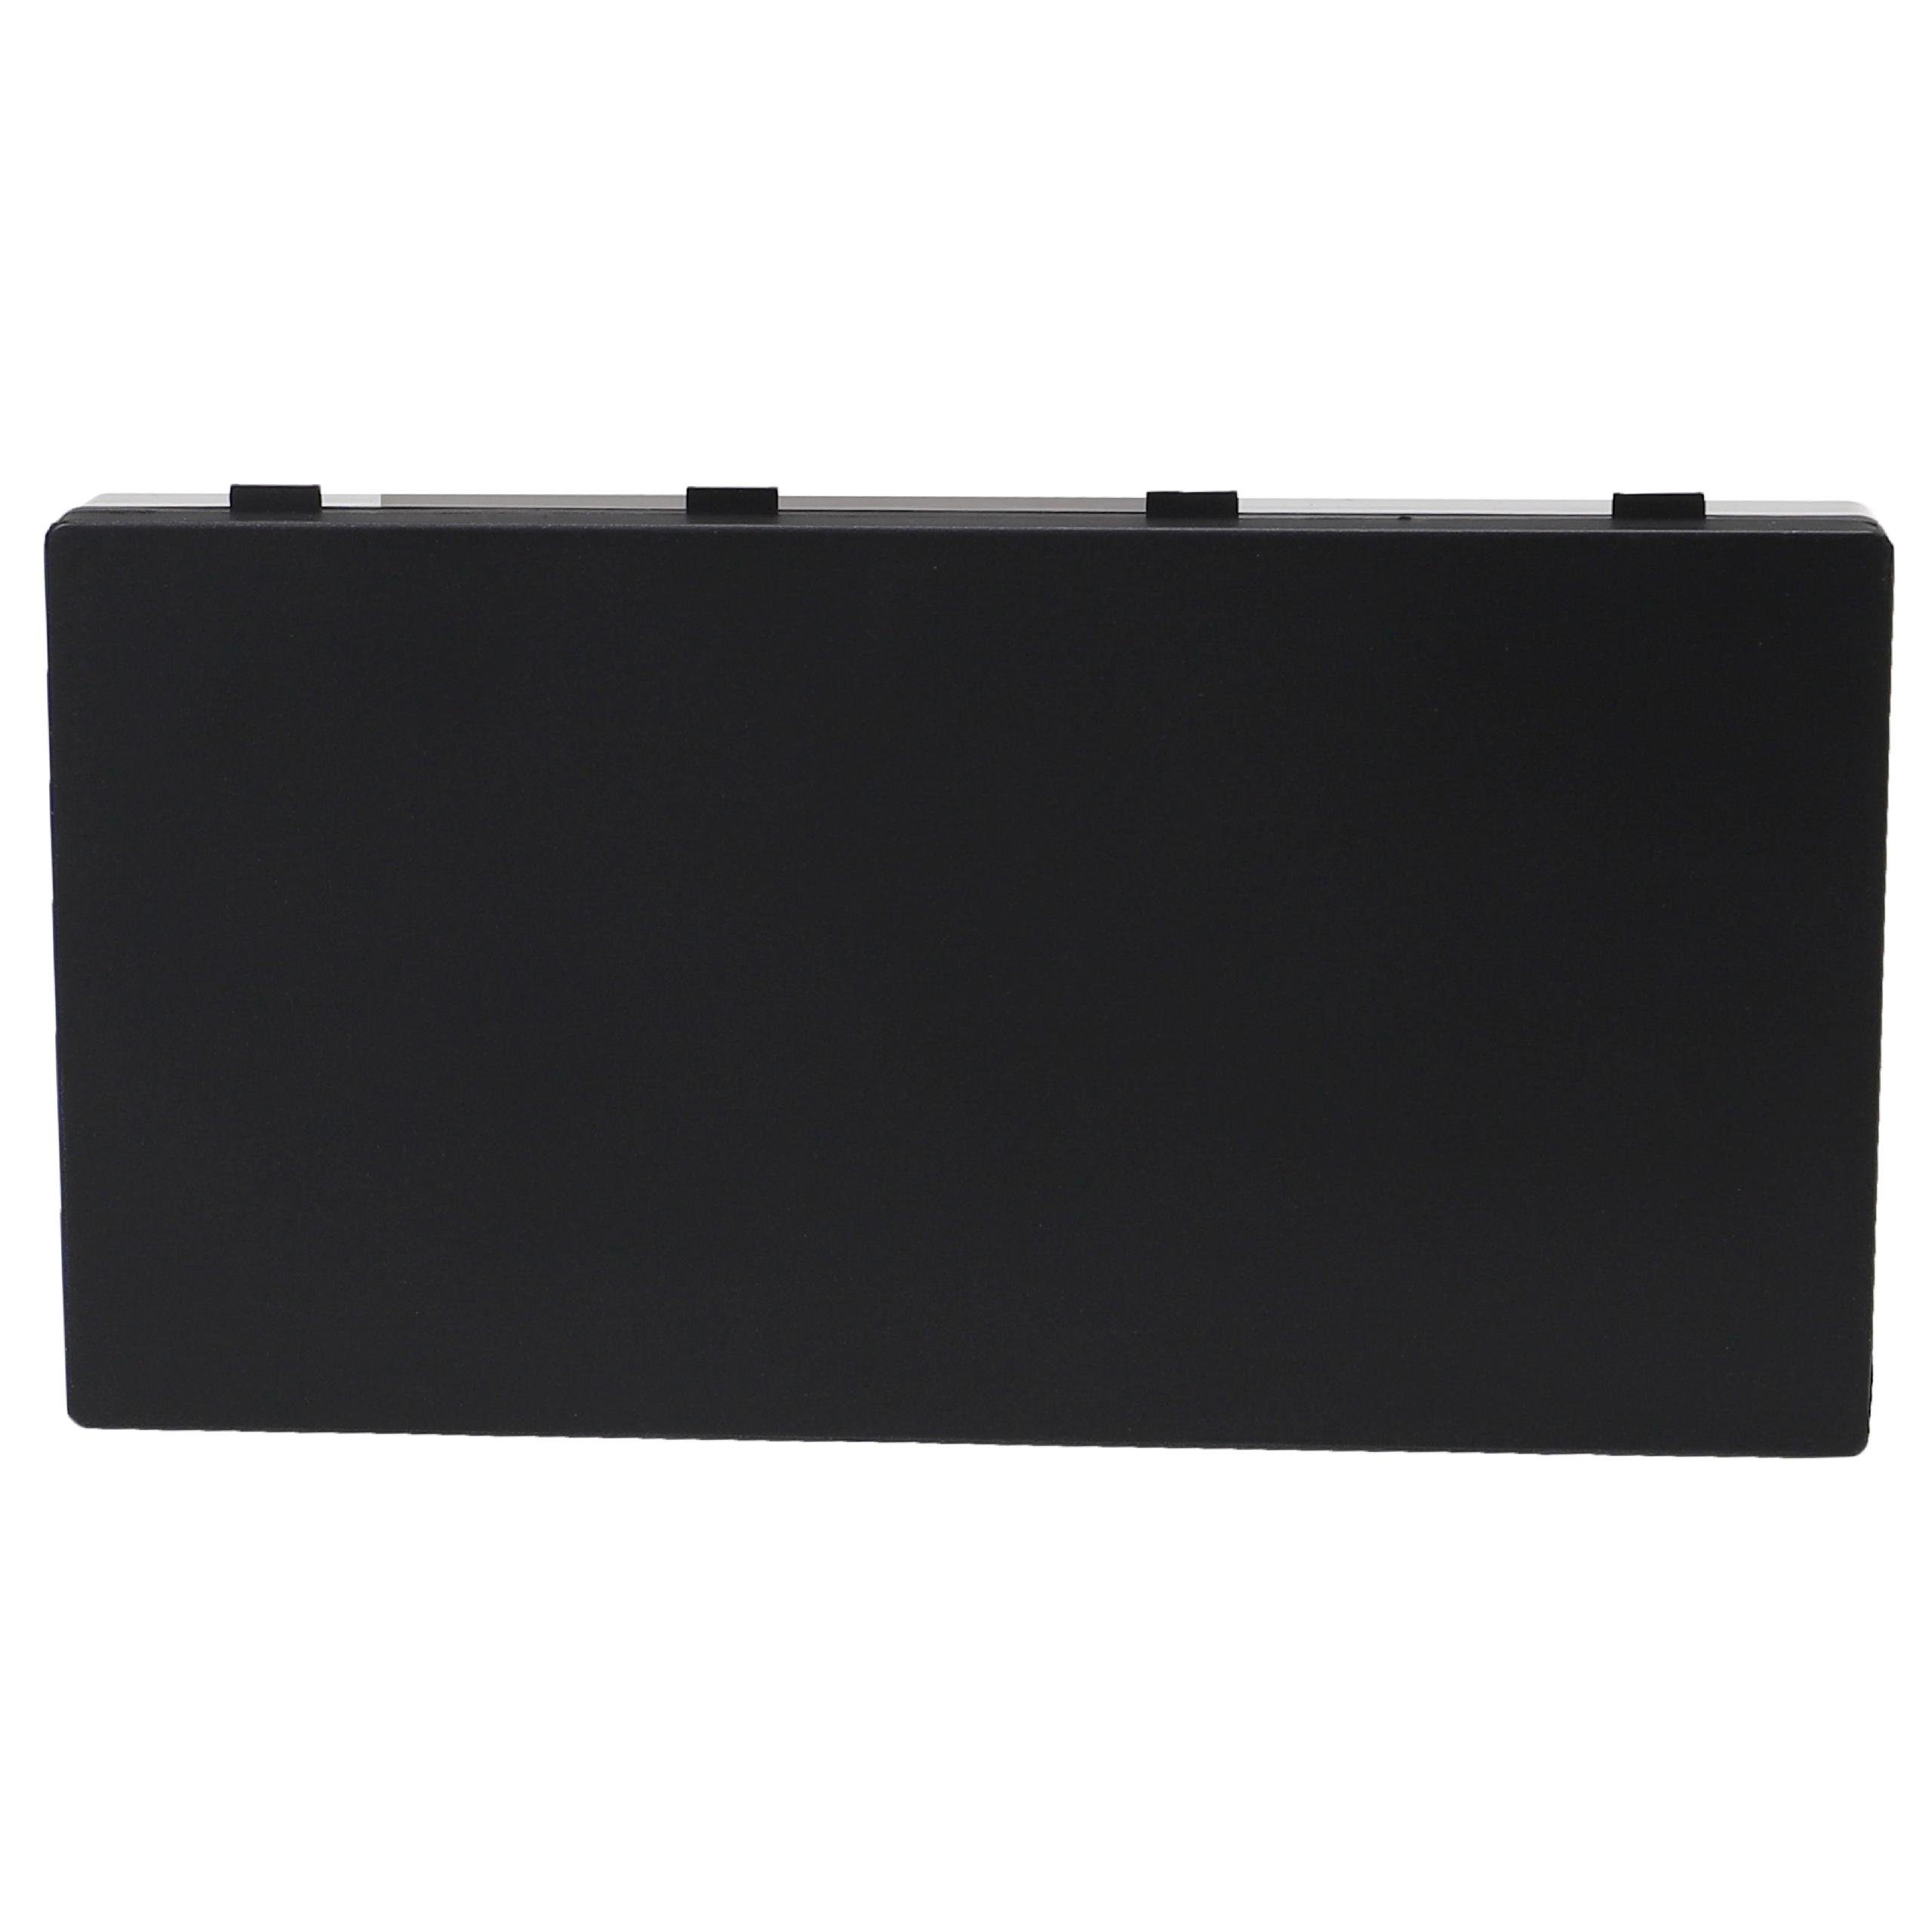 ThinkPad (20HK0000GE), passend (20HK0001GE), P71 für vhbw Laptop-Akku Lenovo mAh P71 6400 P71